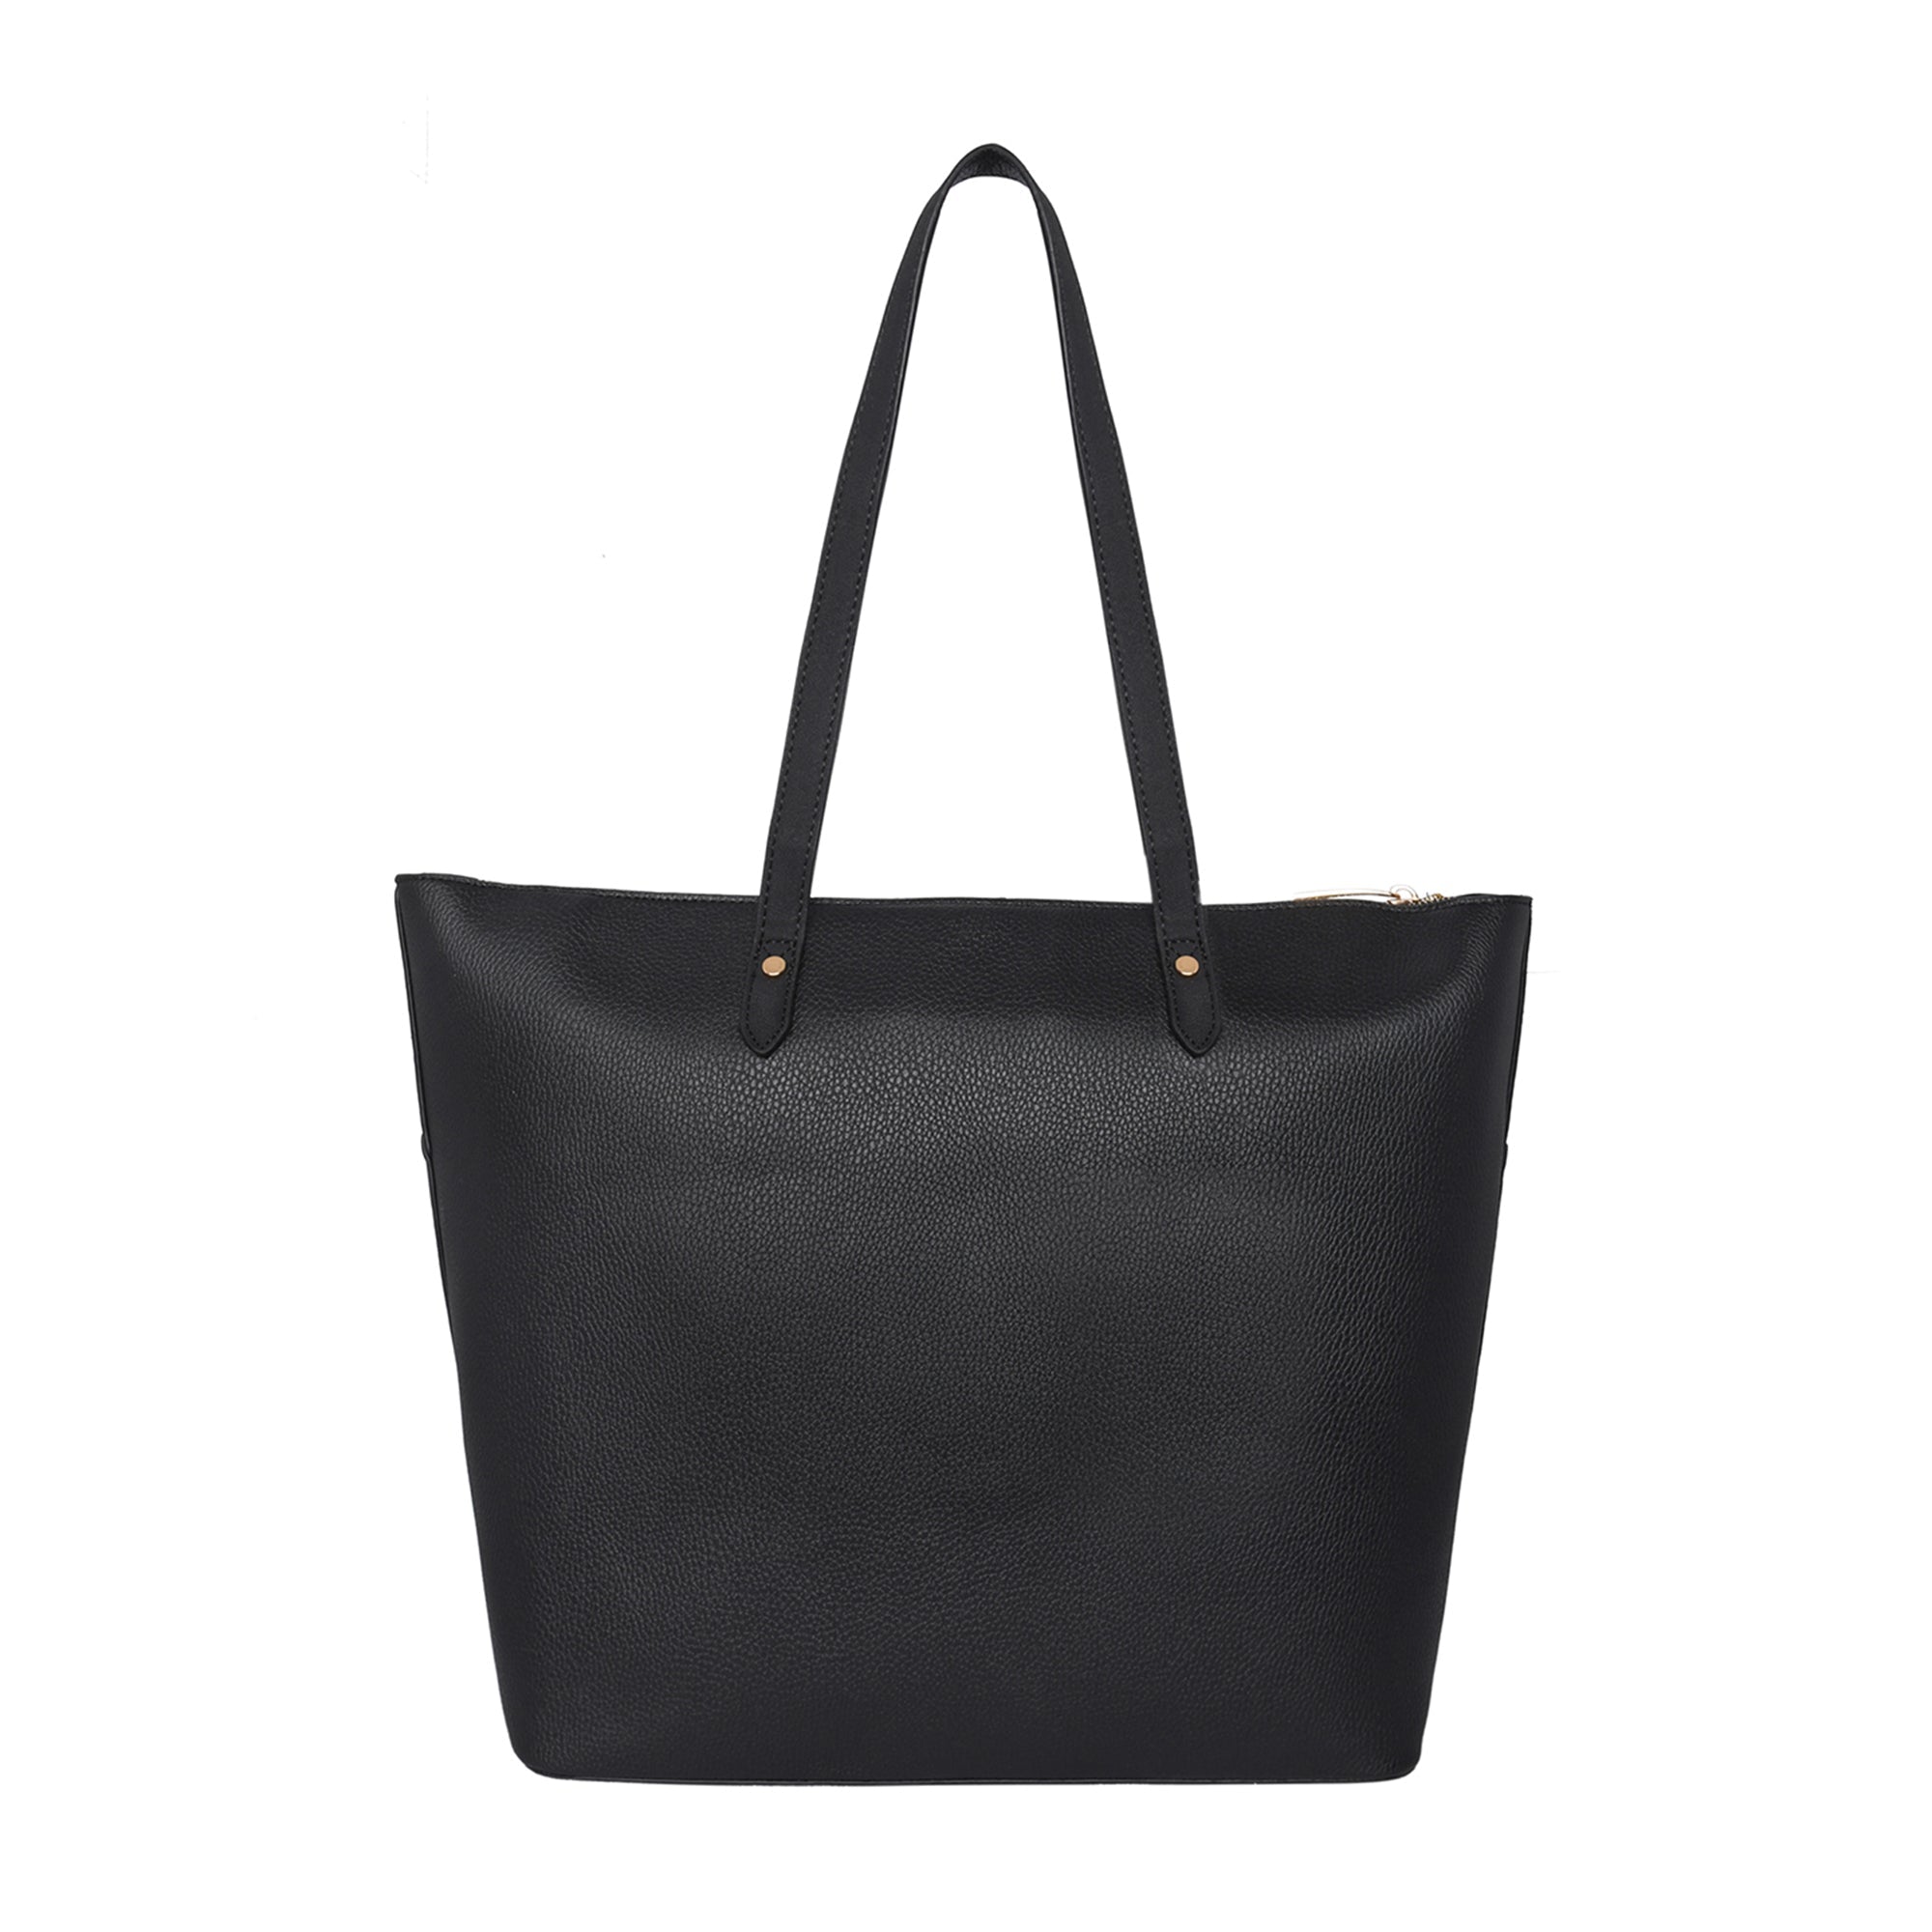 Accessorize London Women's Faux Leather Black Spacious Emily Tote Bag